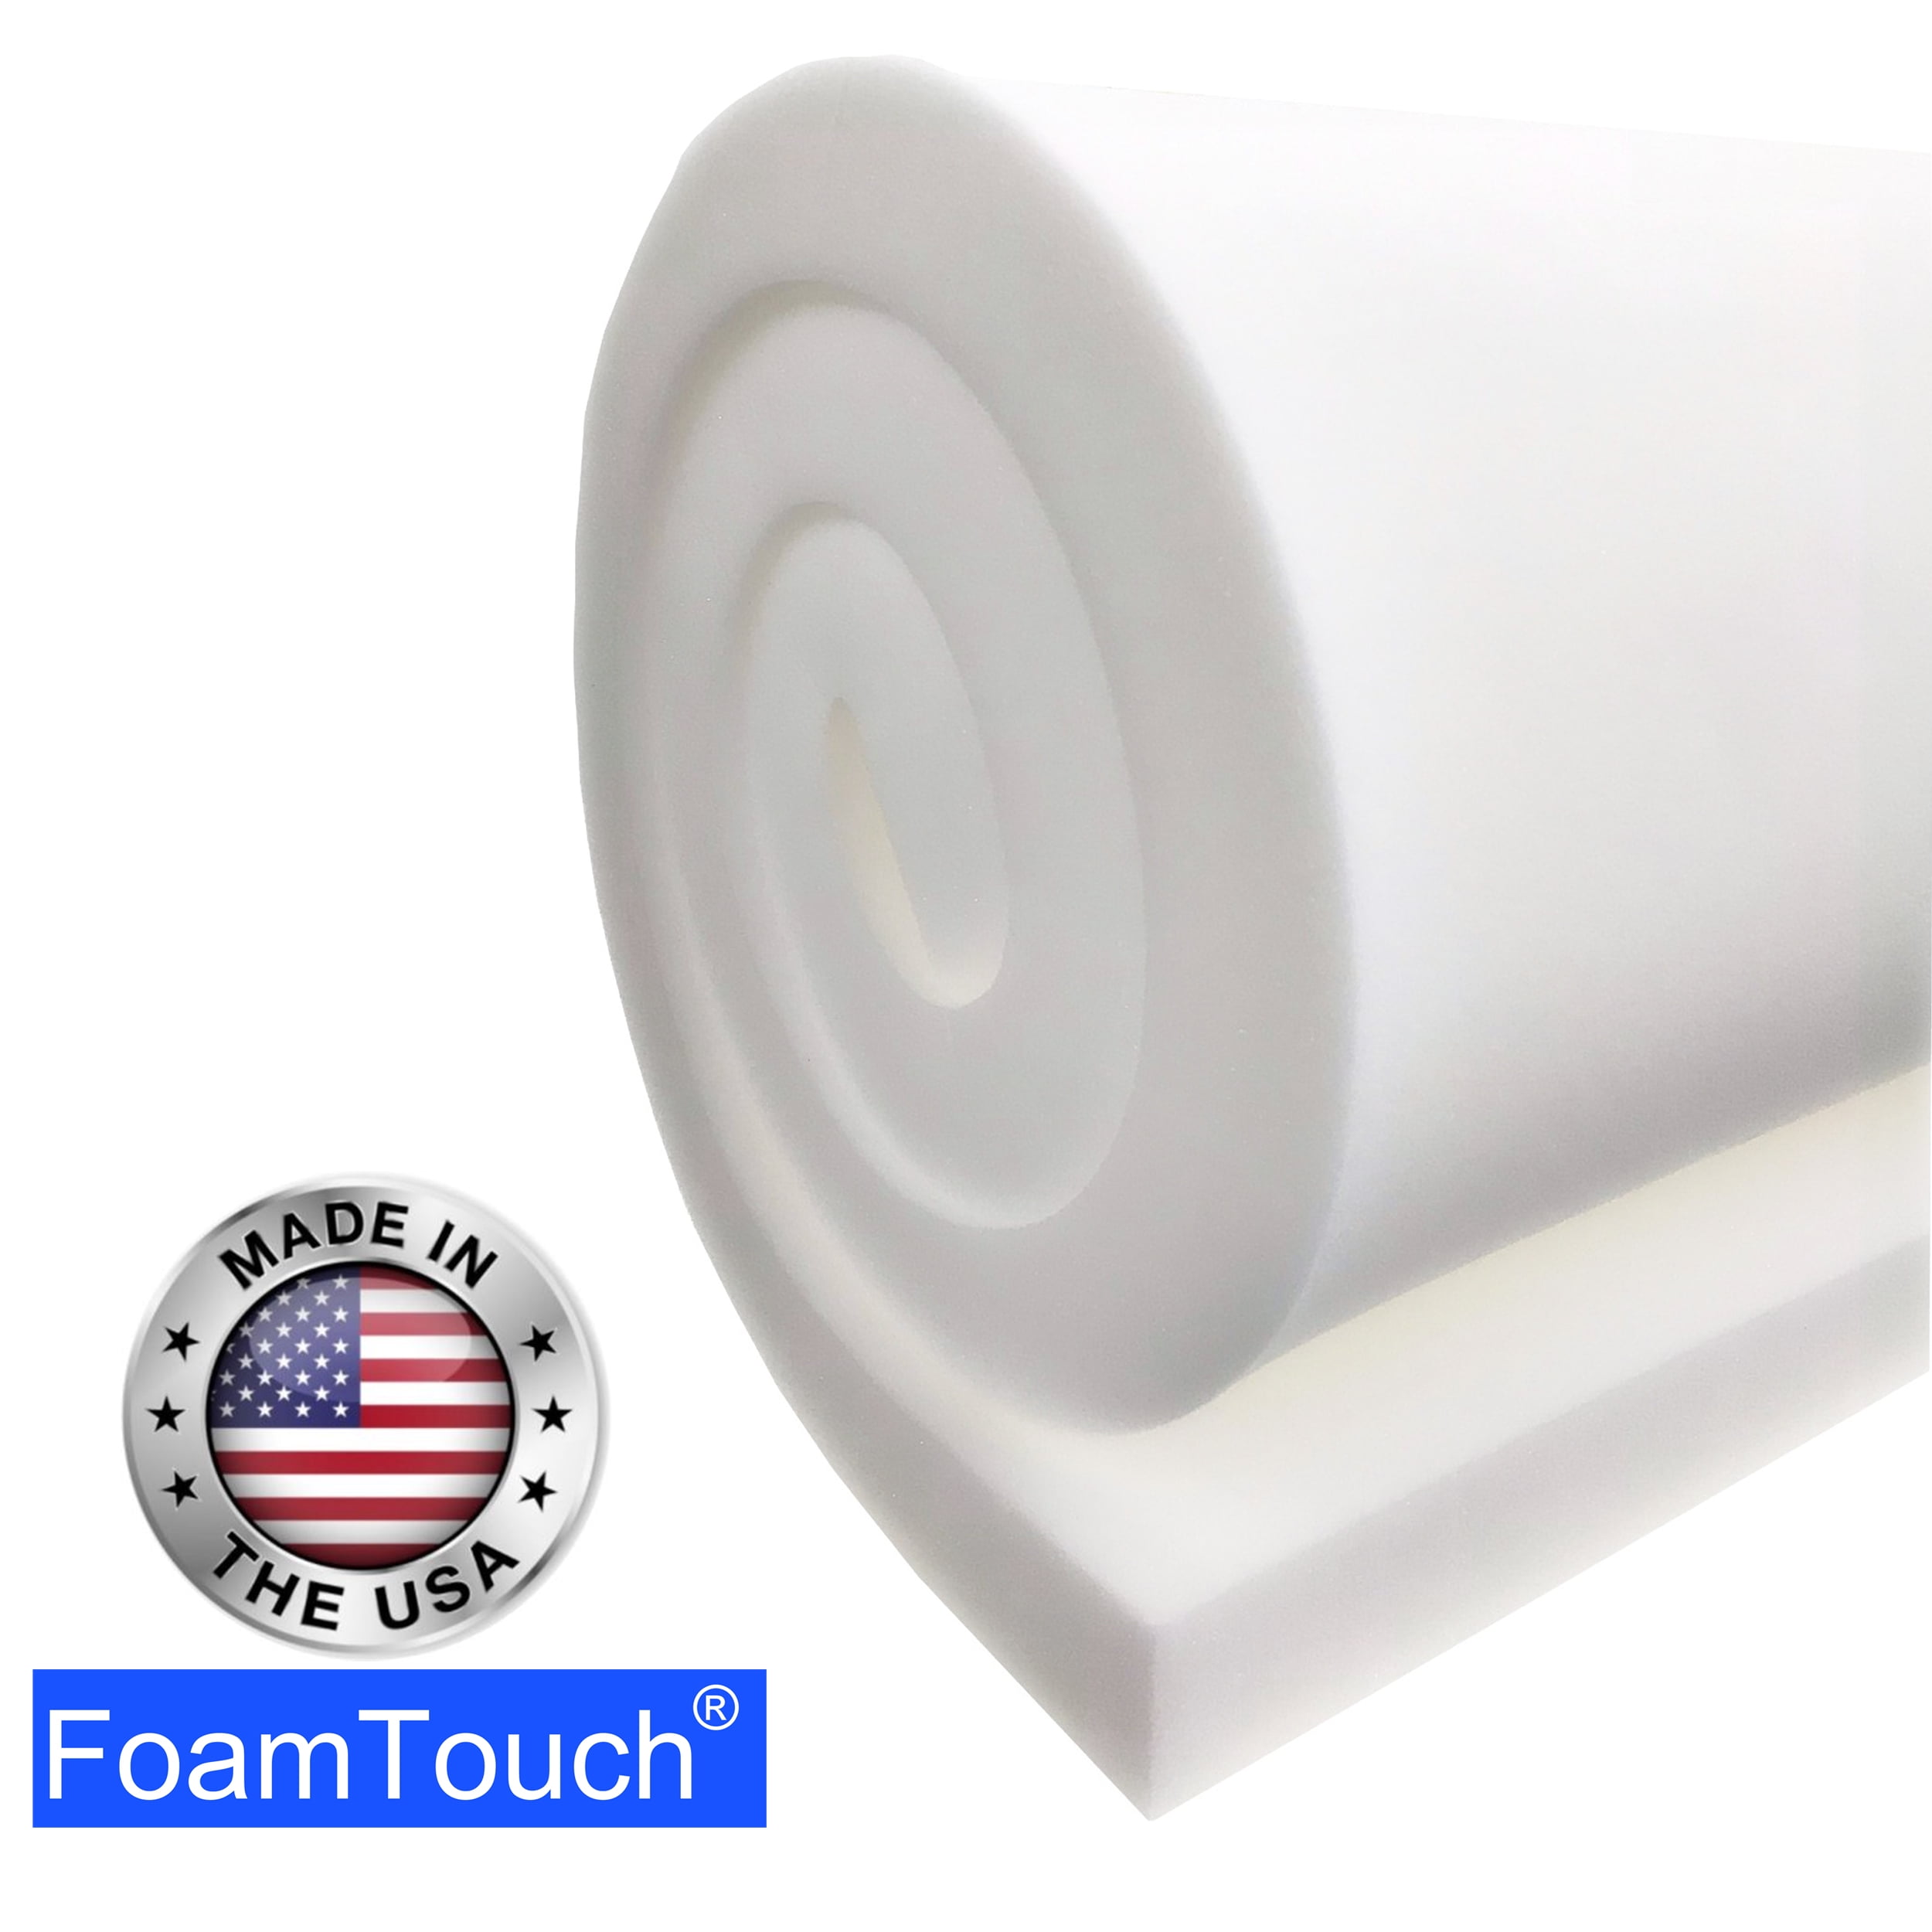 Professional Upholstery Foam Padding 5 X 26 X 26 FREE SHIPPING!!!